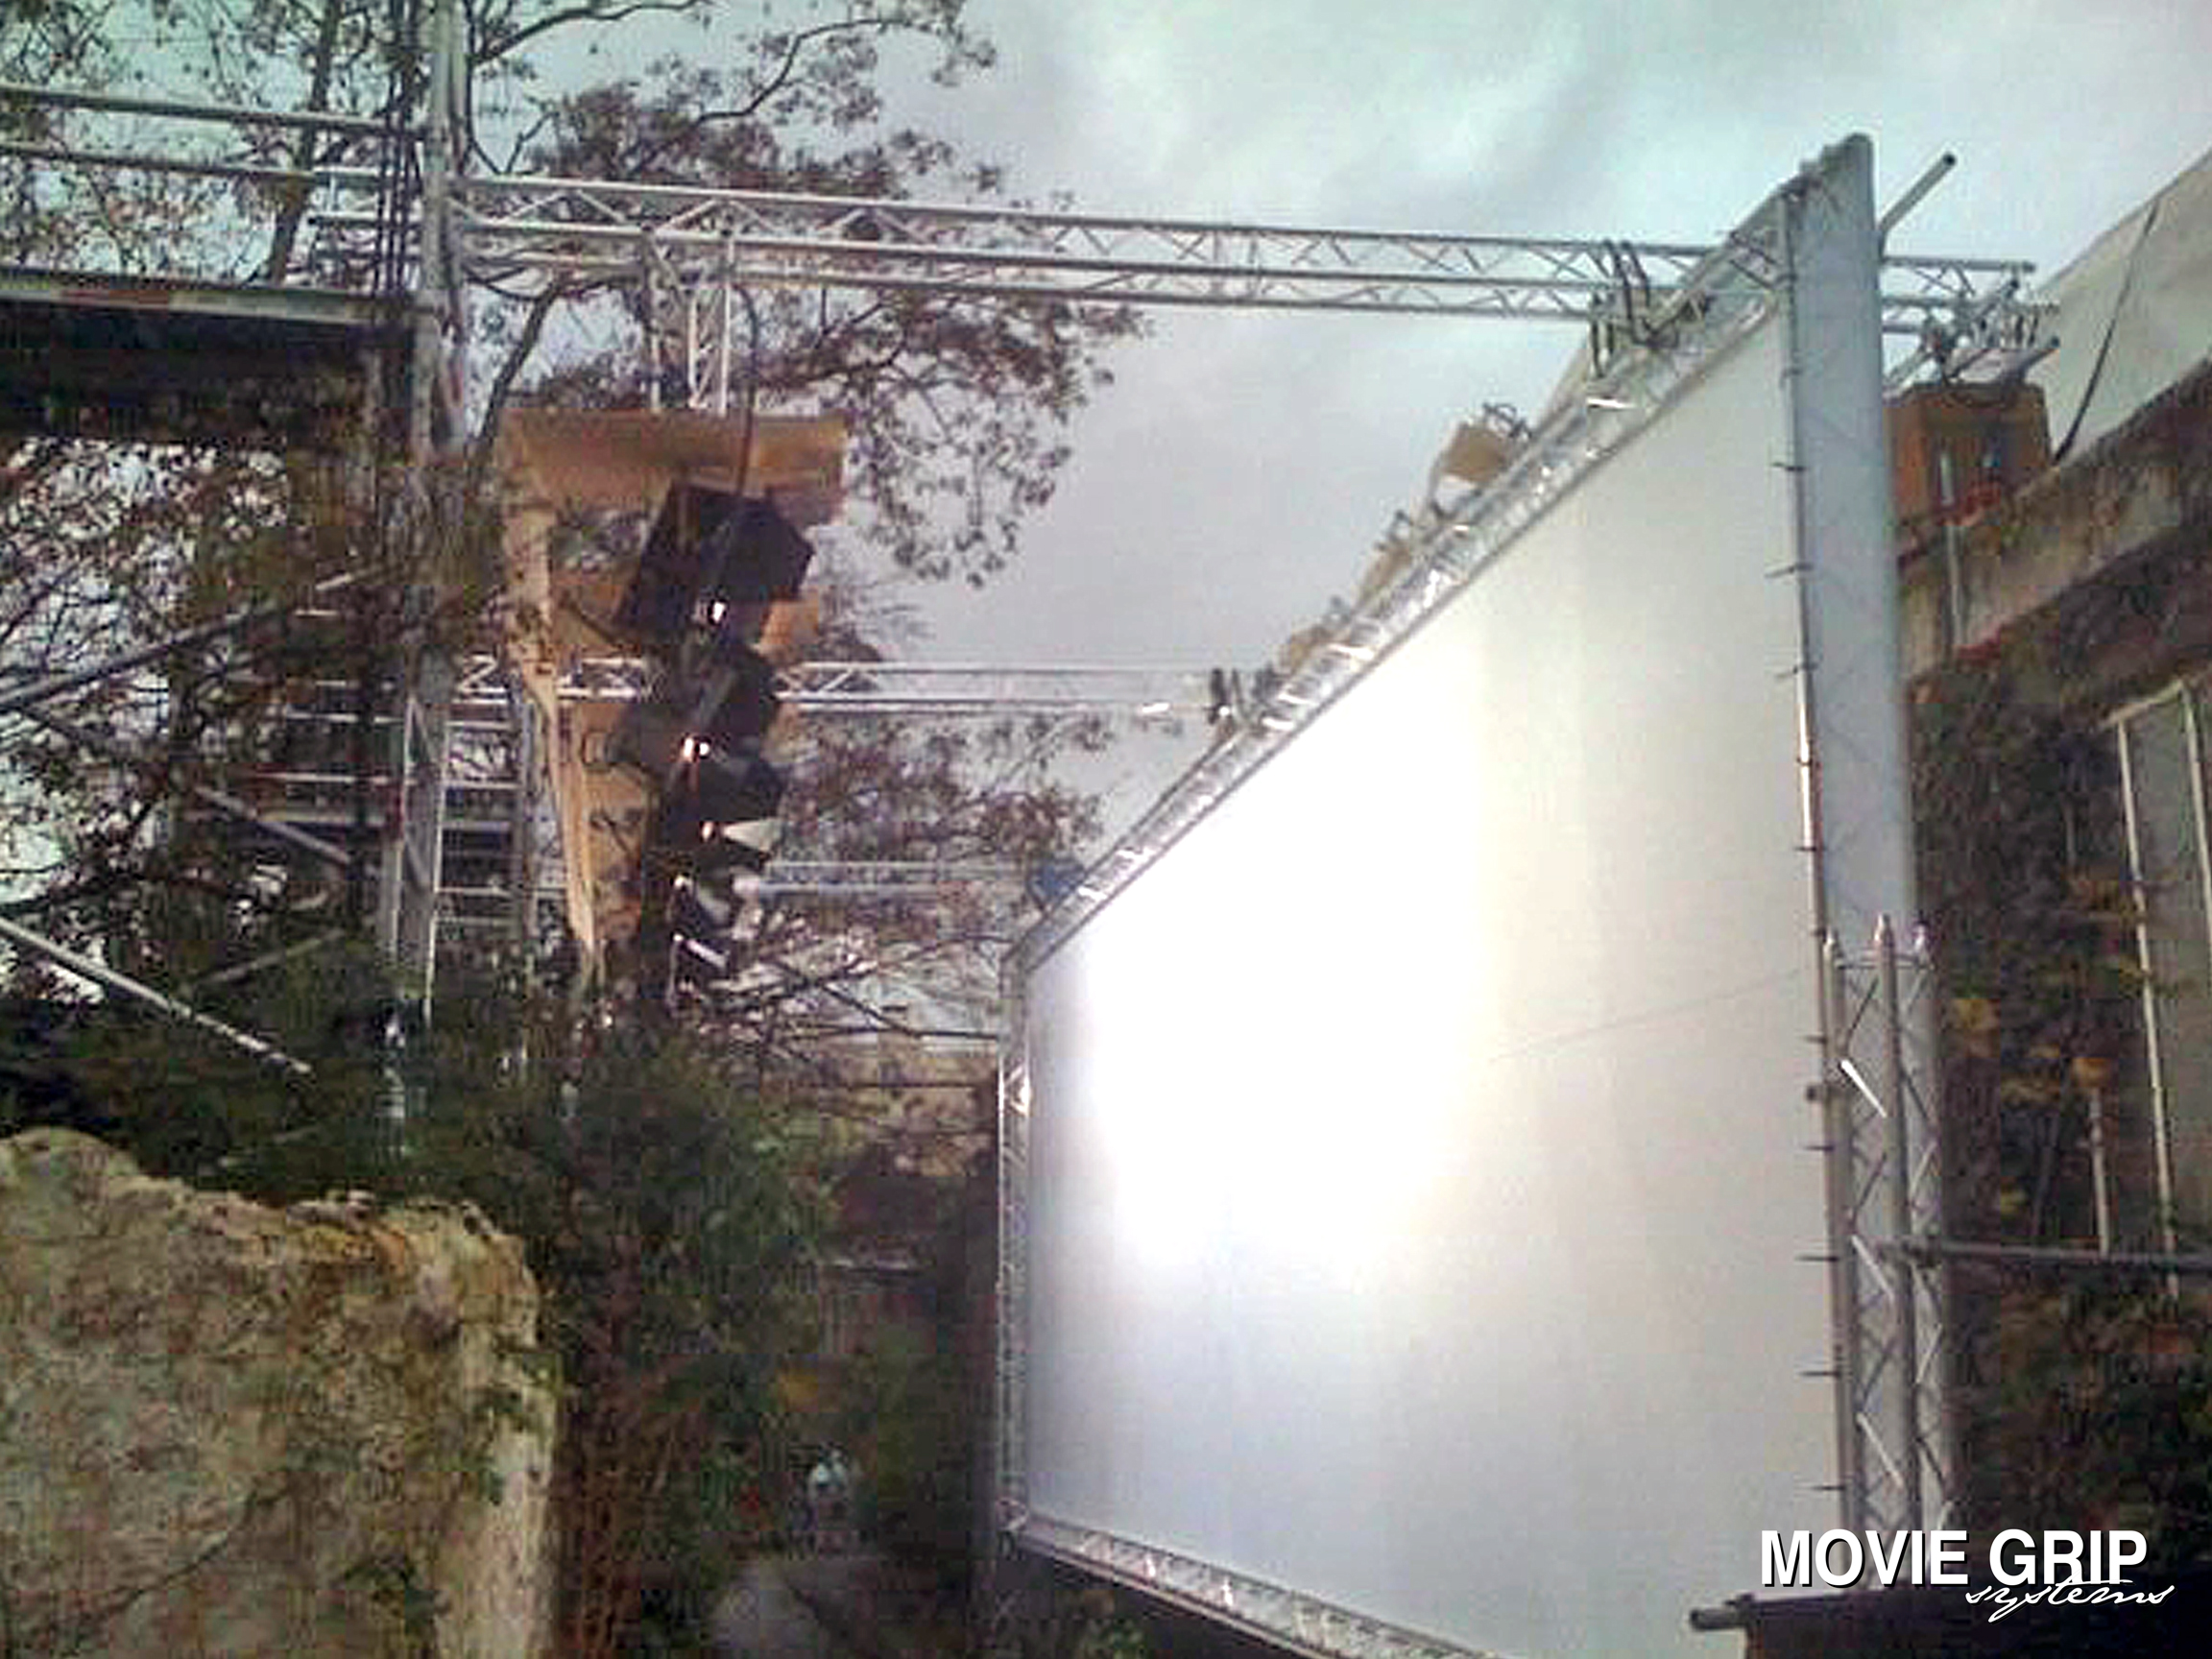 Movie Grip Systems - MOVIE LIGHT